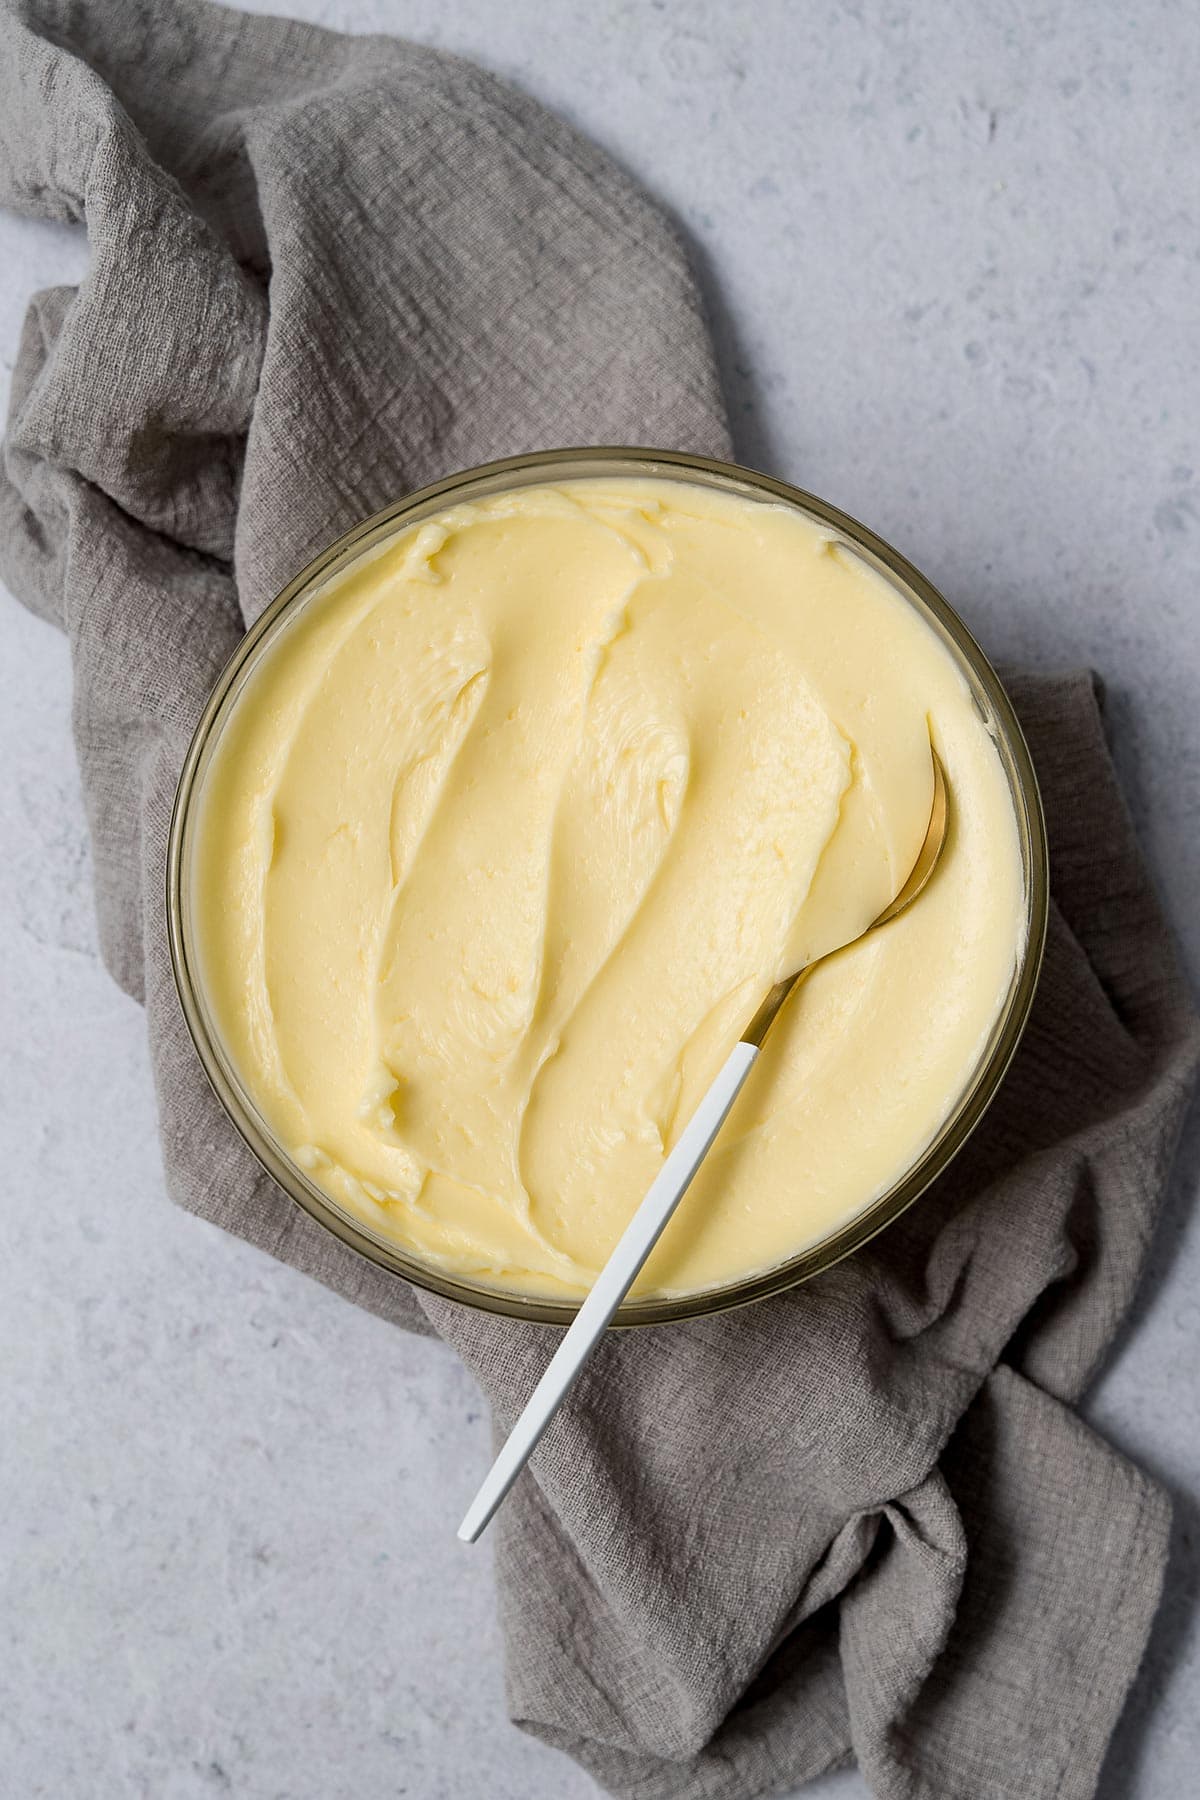 Reverse Swiss meringue buttercream in bowl with spoon on grey kitchen towel